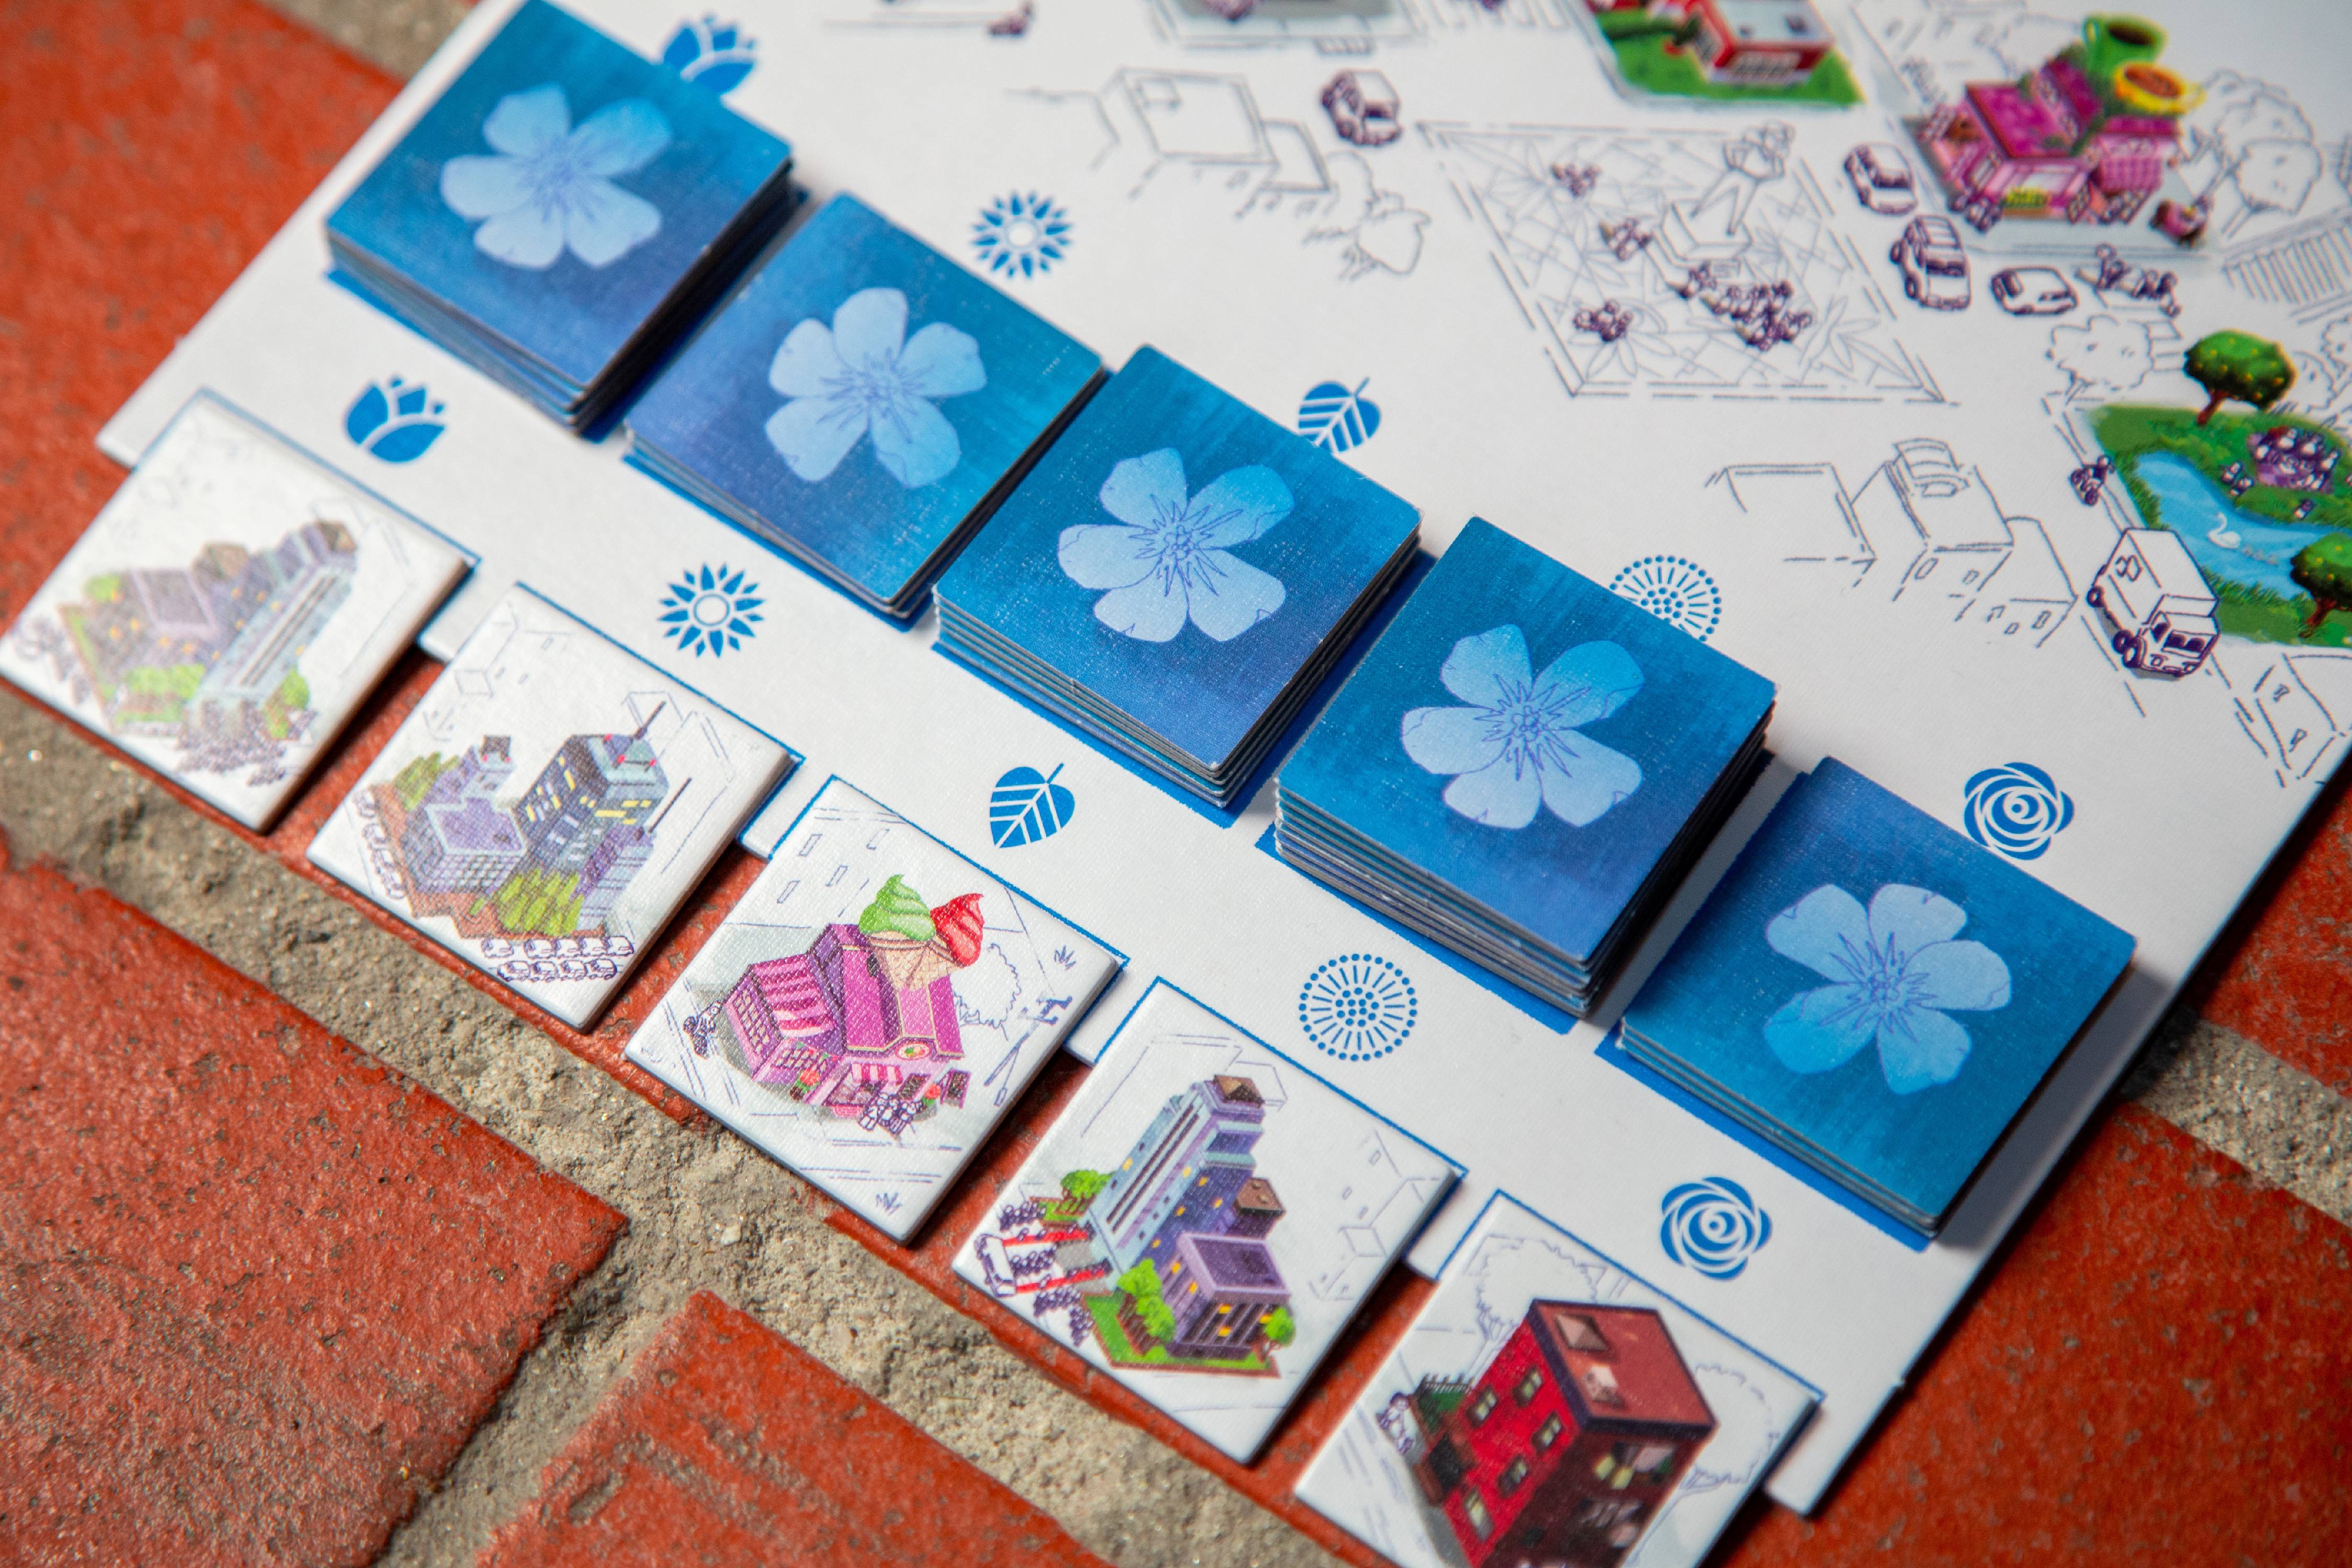 Sidekick Bloom Town Strategy Board Game - image 3 of 10